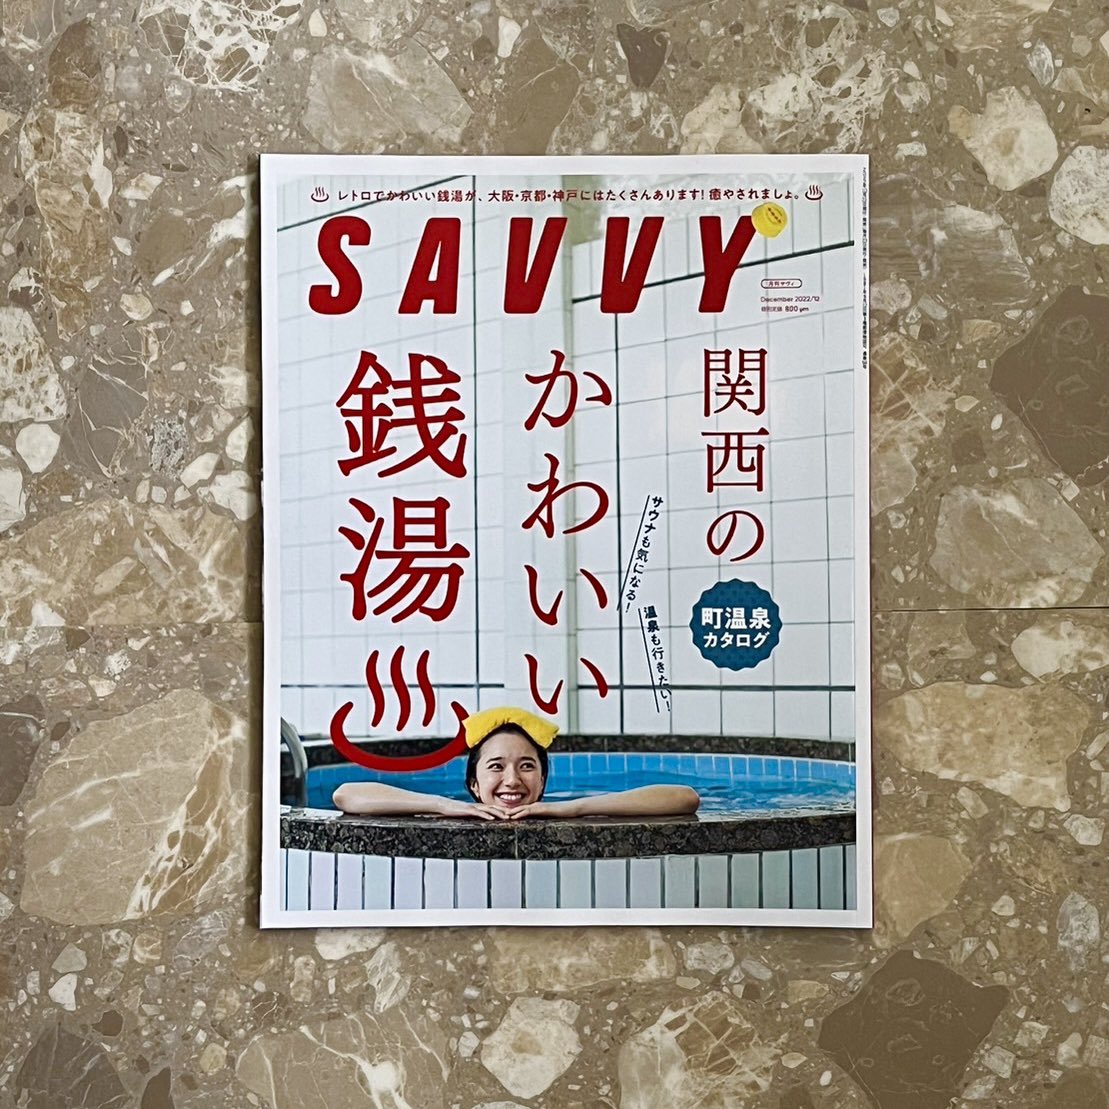 SAVVY編集部 (@SAVVY_lmaga) / Twitter